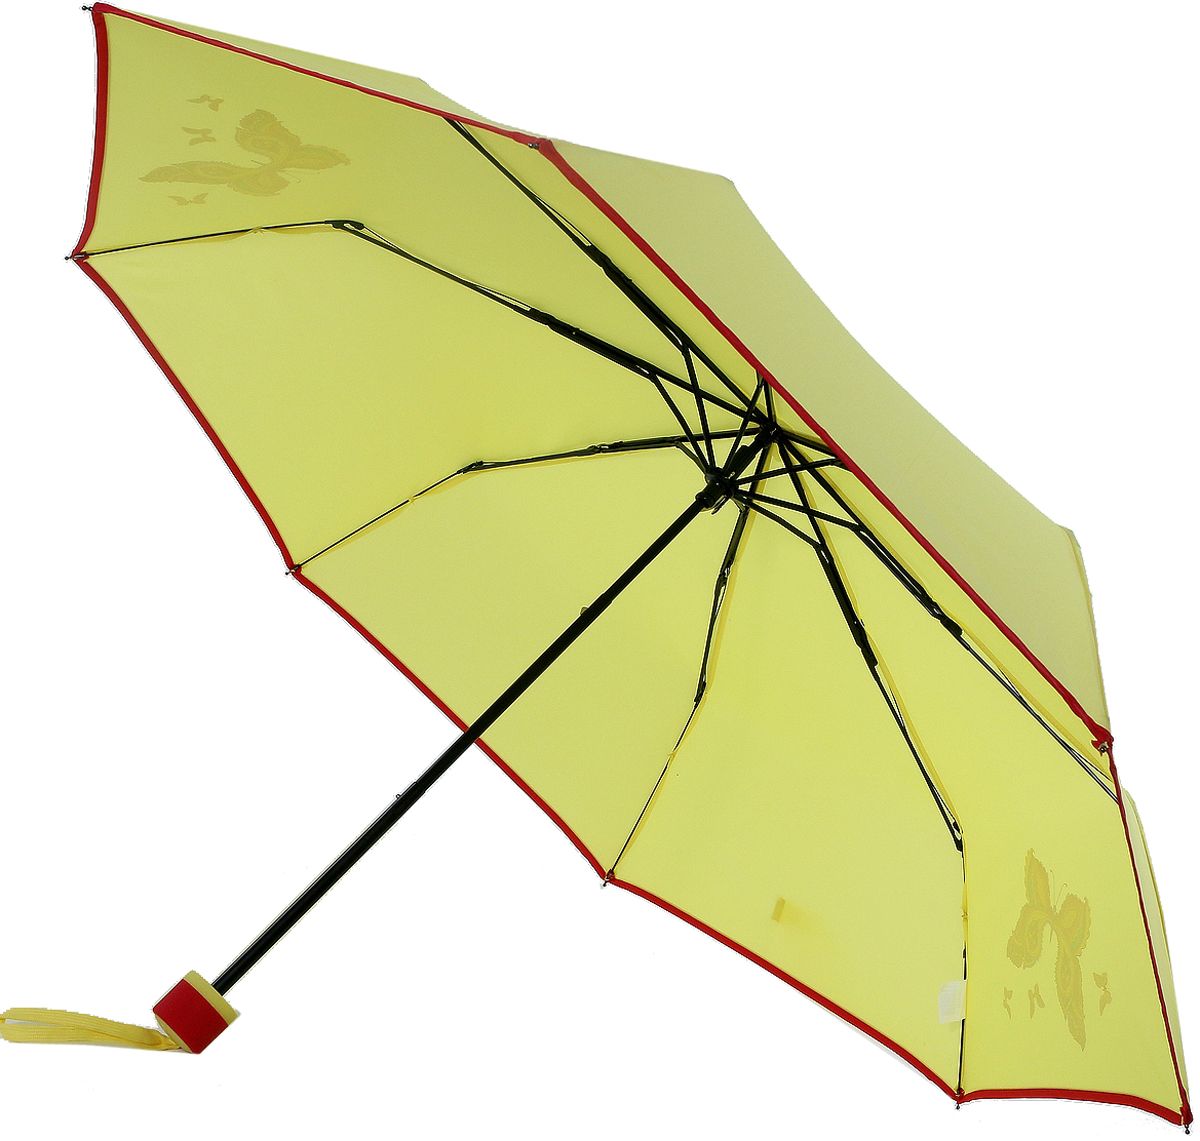  Zhangpu Xuzherg Umbrella Co LTD .3511-1714